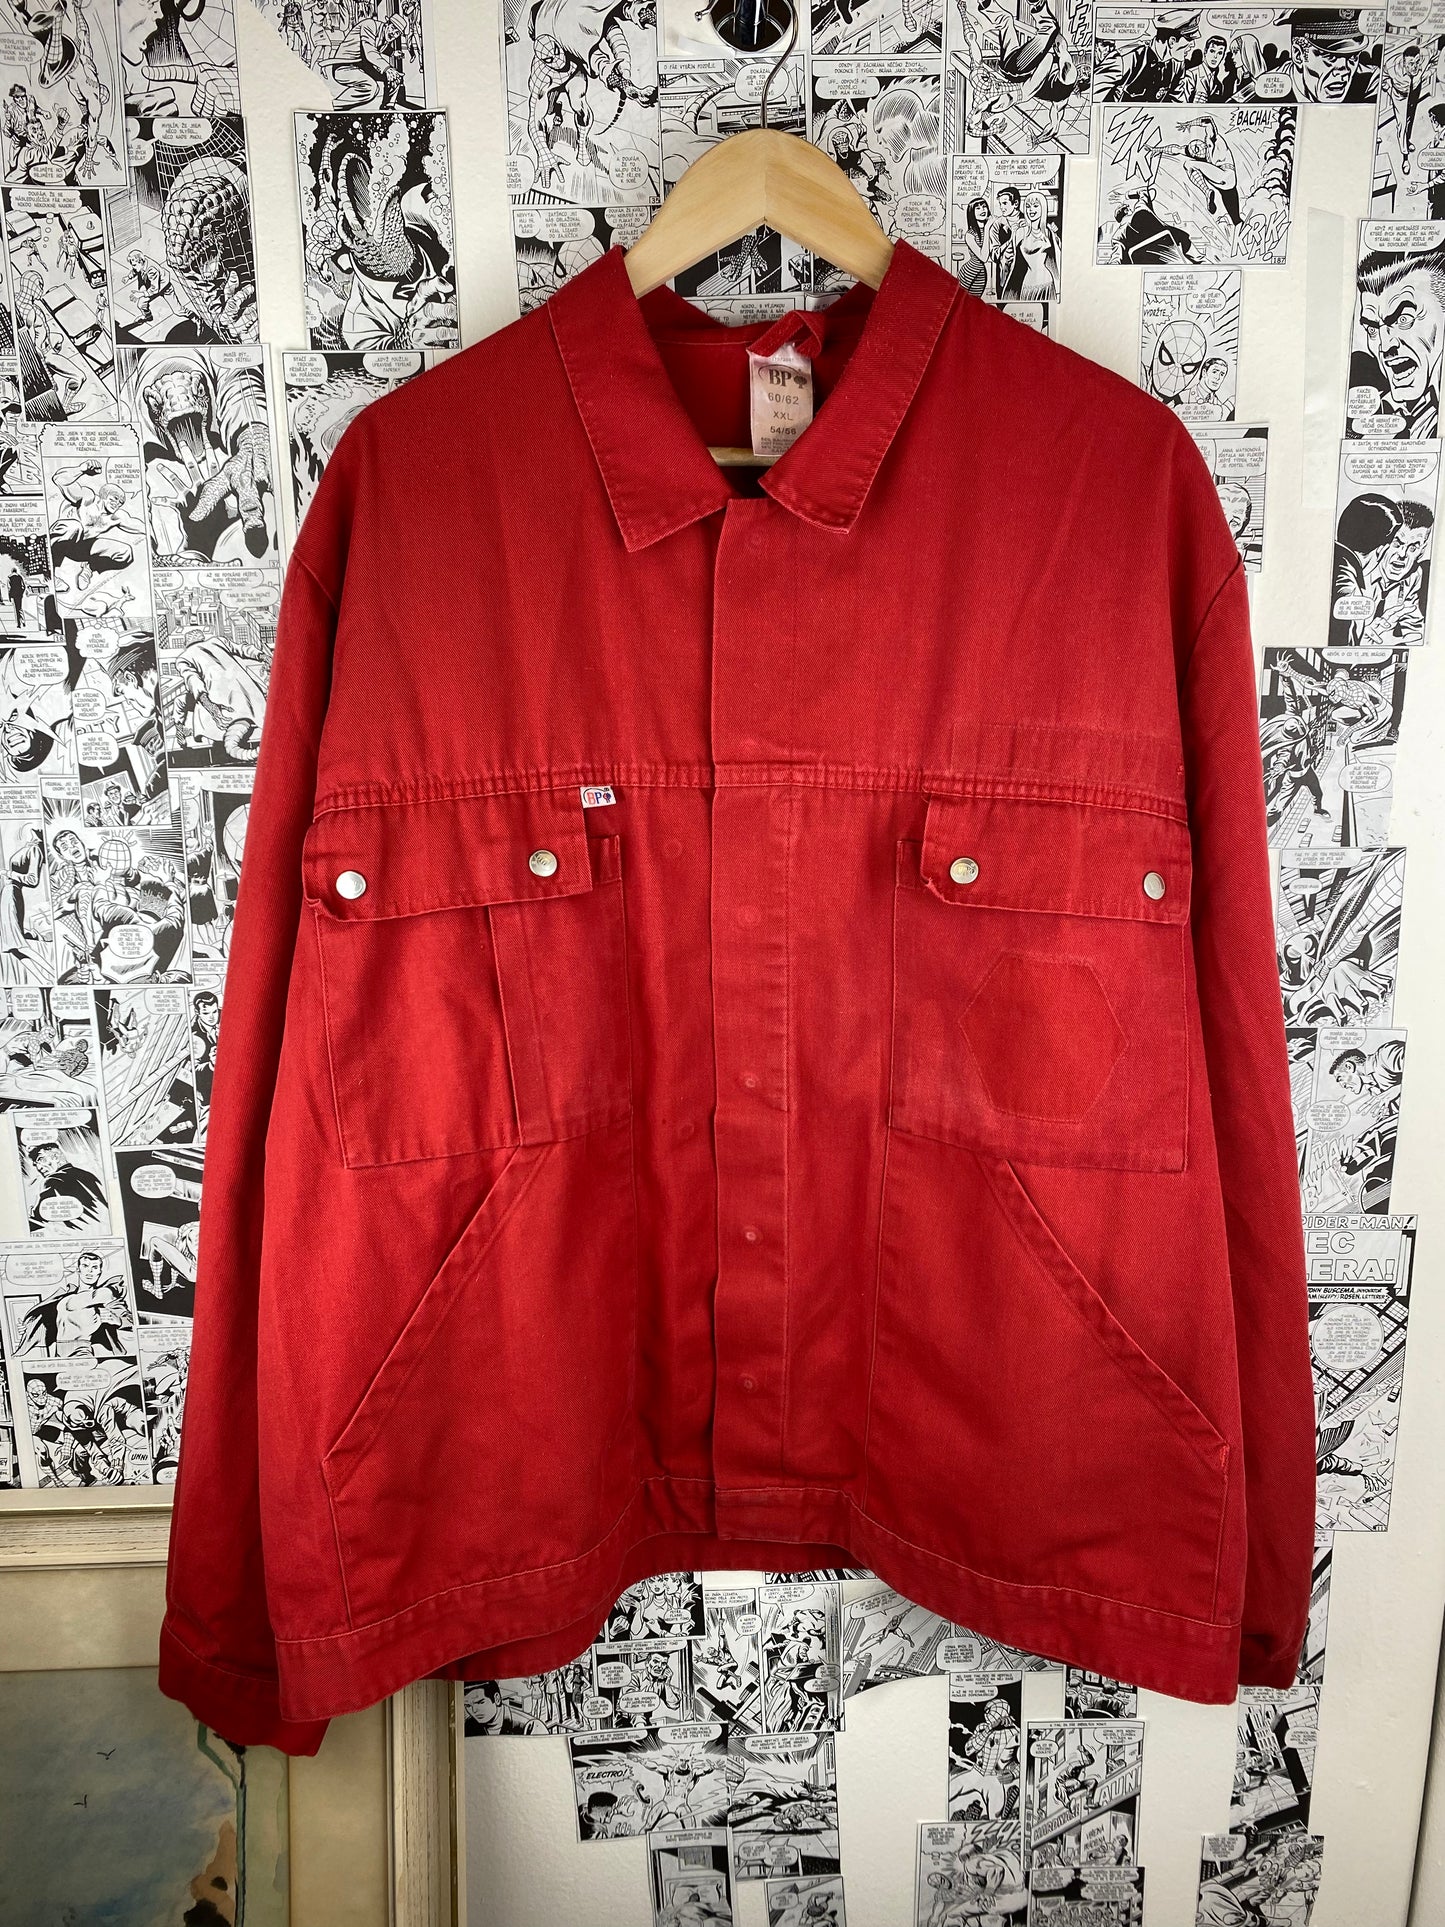 Vintage Workwear 80s/90s Jacket from UK